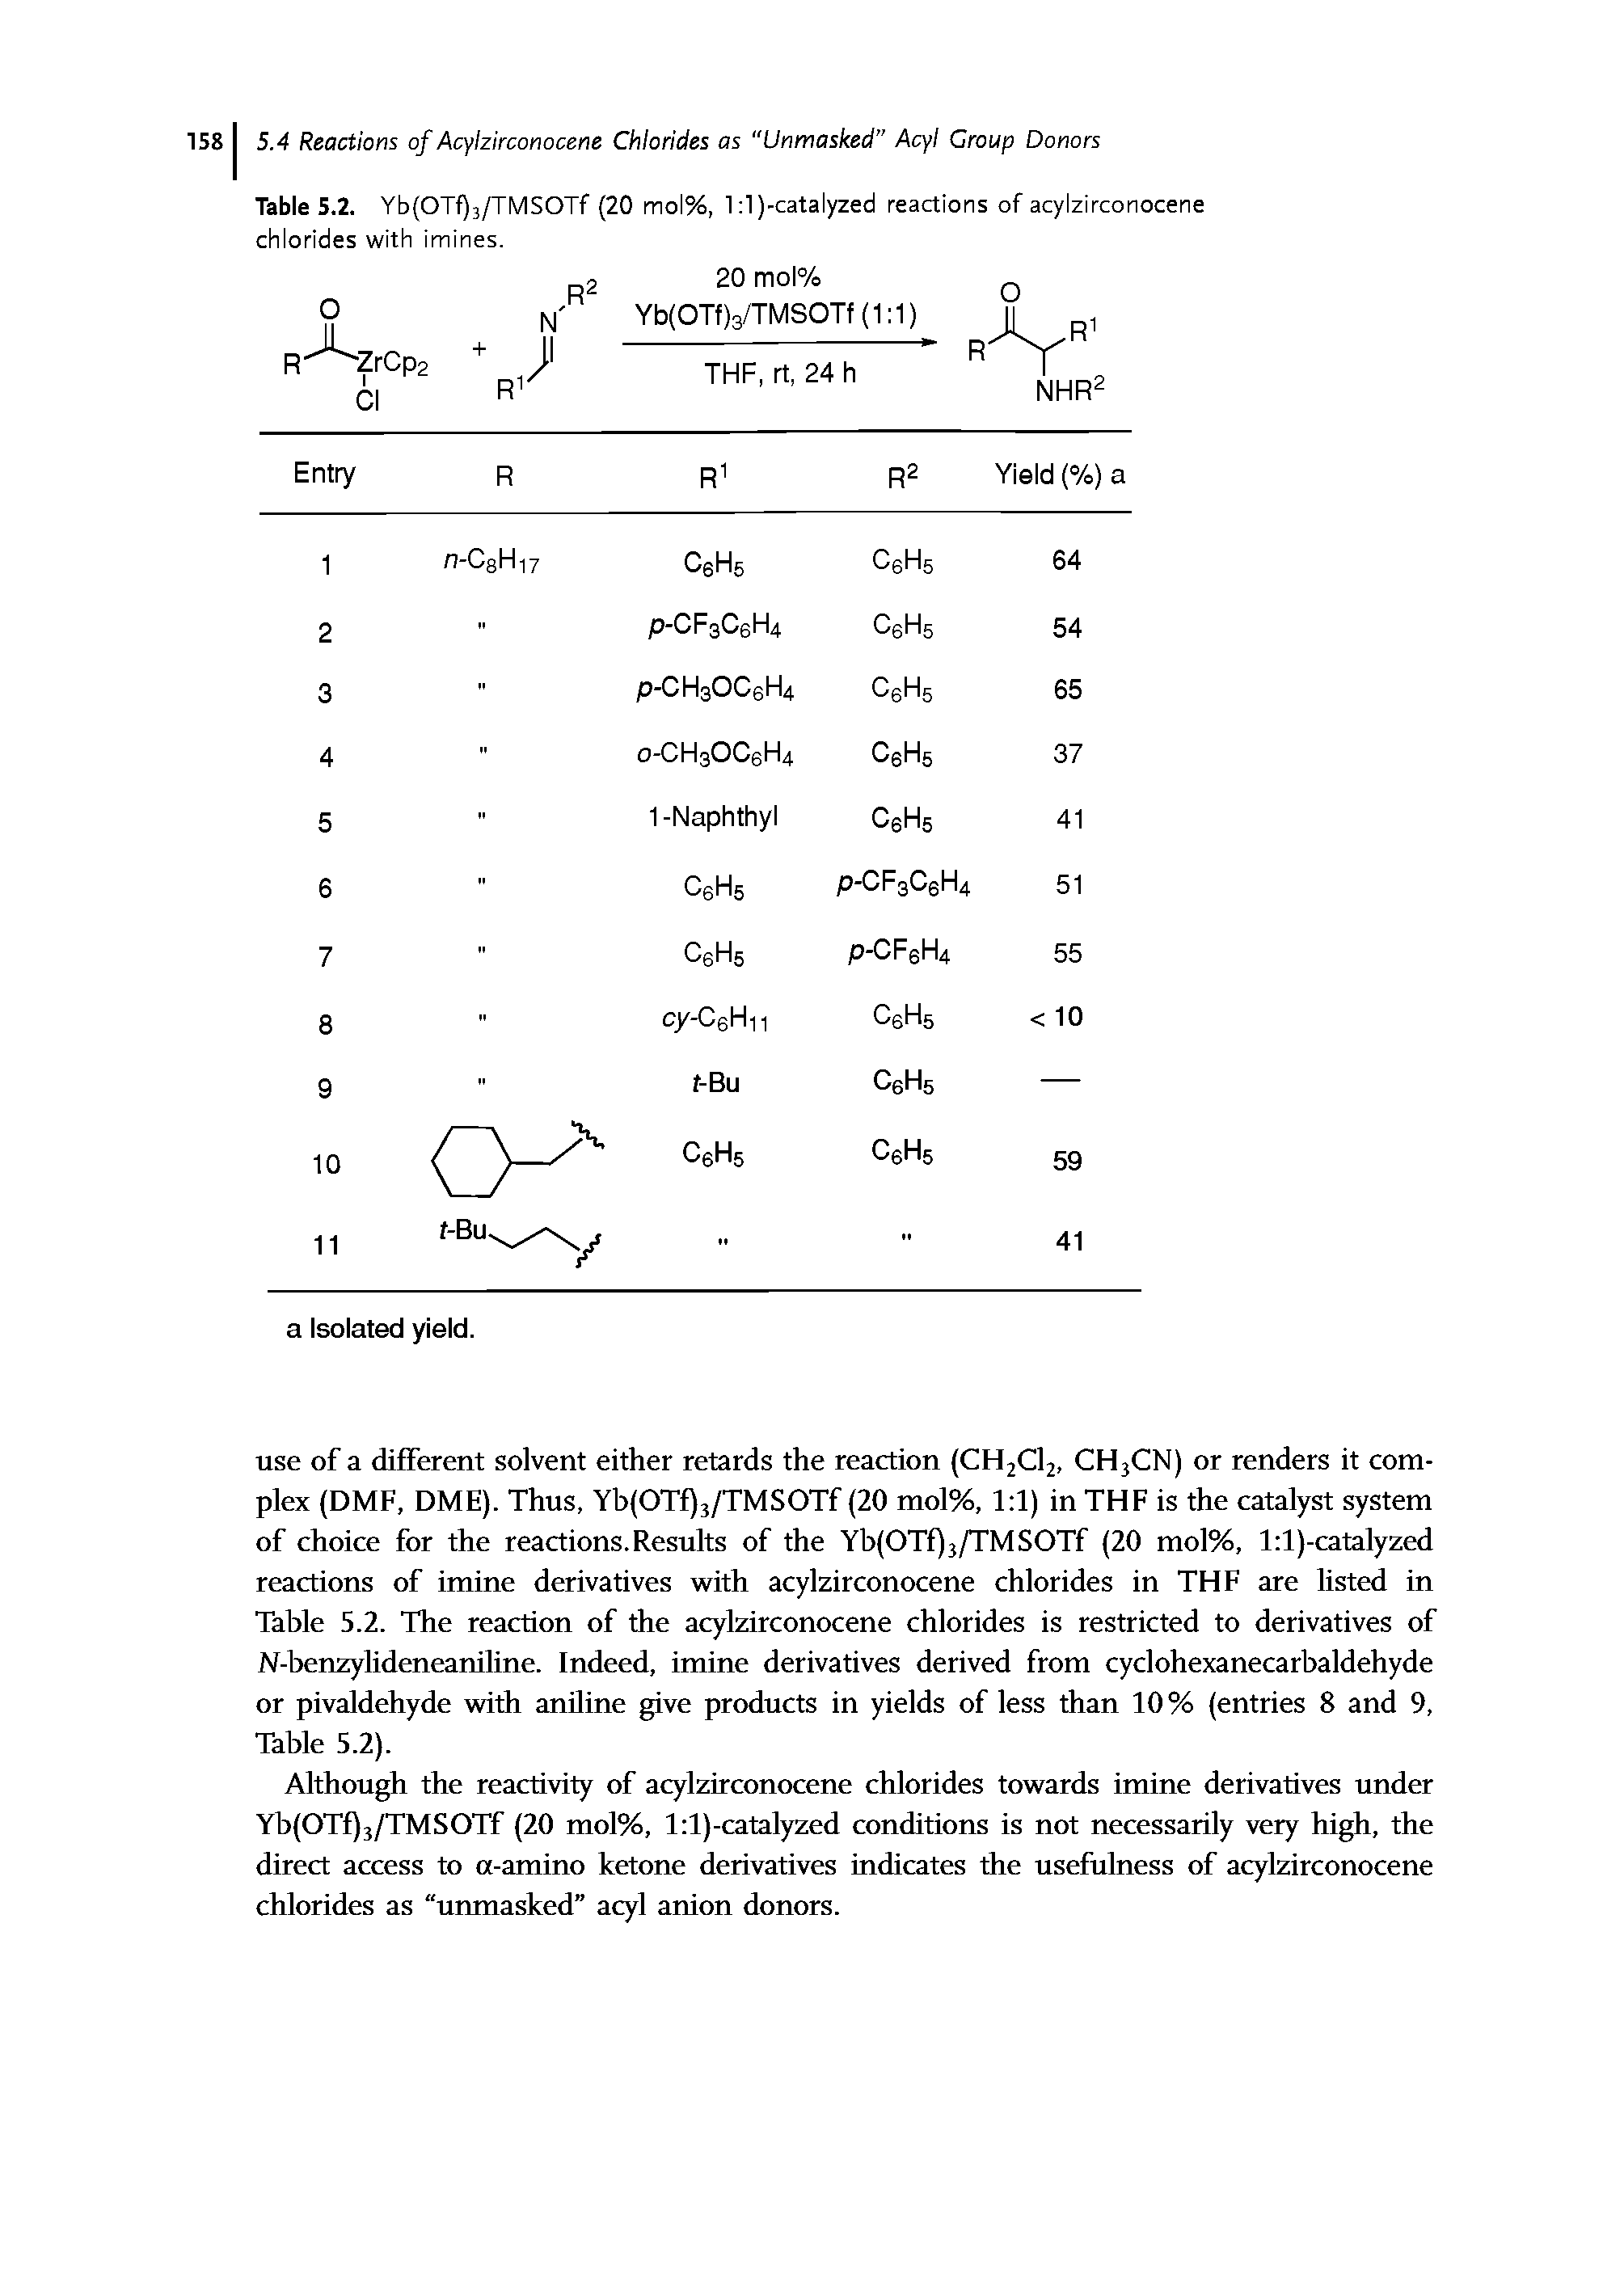 Table 5.2. Yb(OTf)3/TMSOTf (20 mol%, l l)-catalyzed reactions of acylzirconocene chlorides with imines.